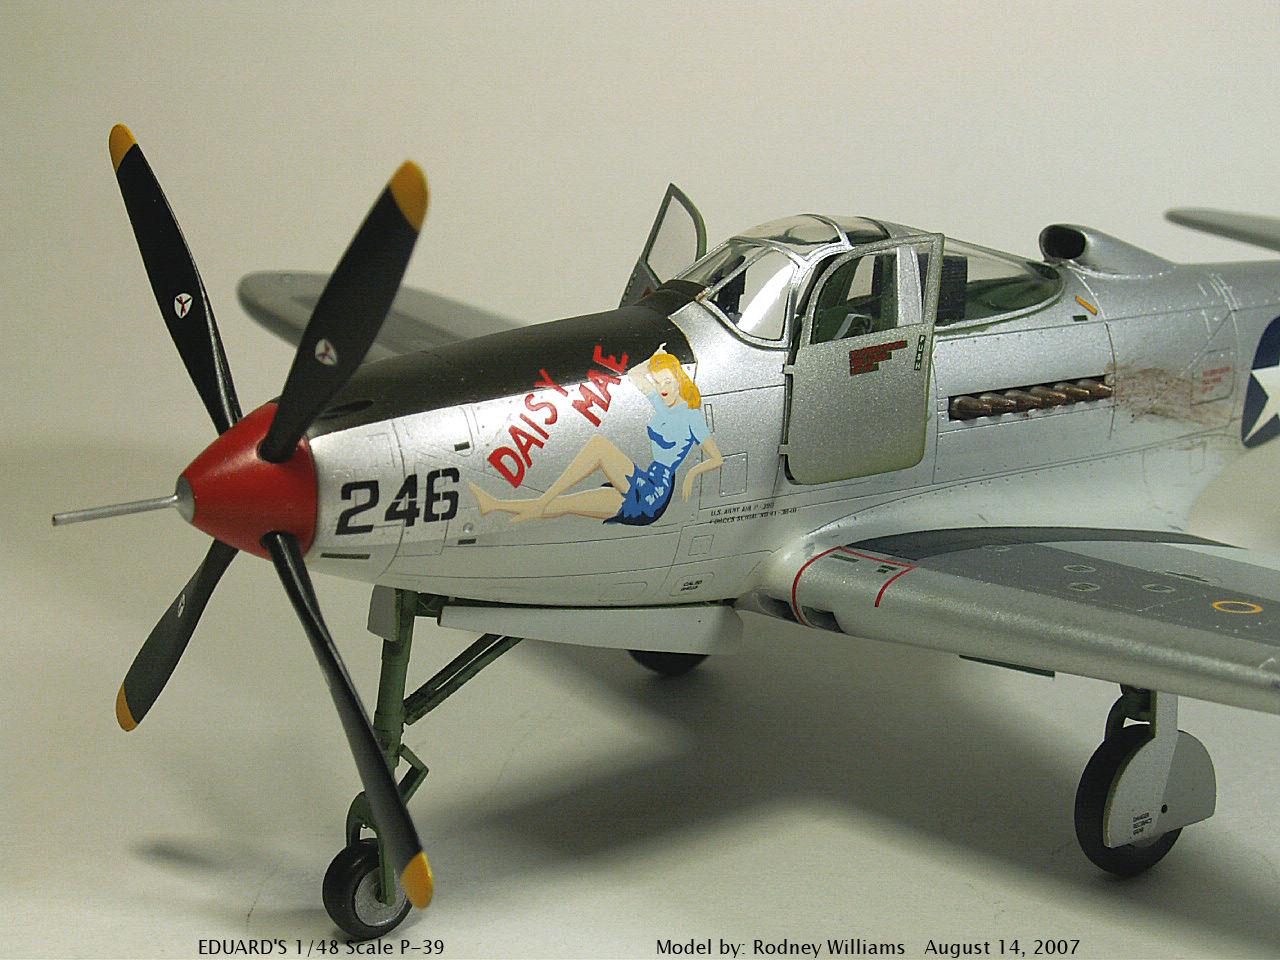 1/48 Scale P-39 Airacobra. - iModeler